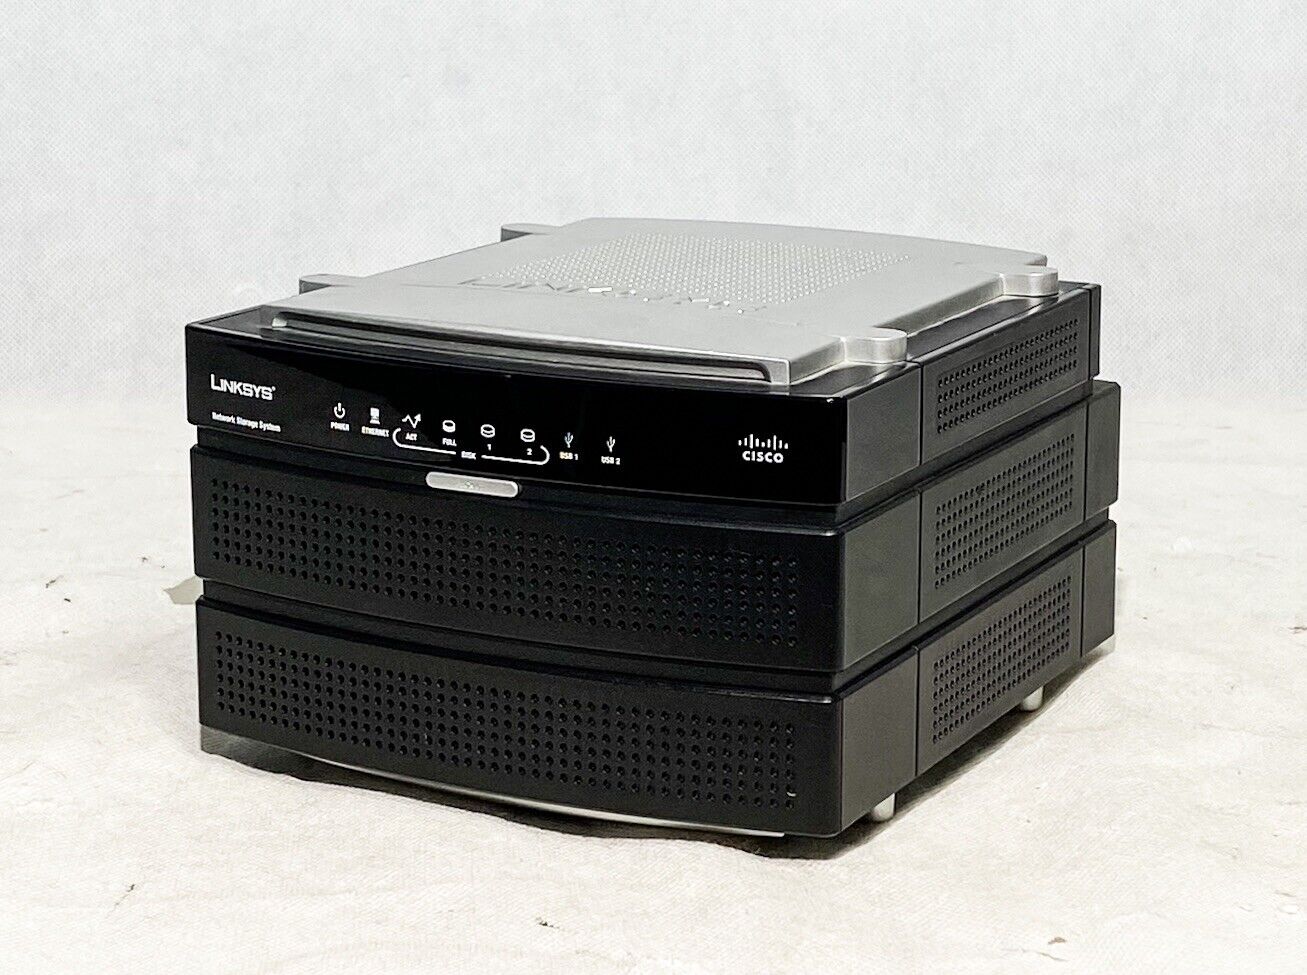 Cisco-Linksys NAS200 Network Storage System With 2 Bays, No Power Cord (WORKS)